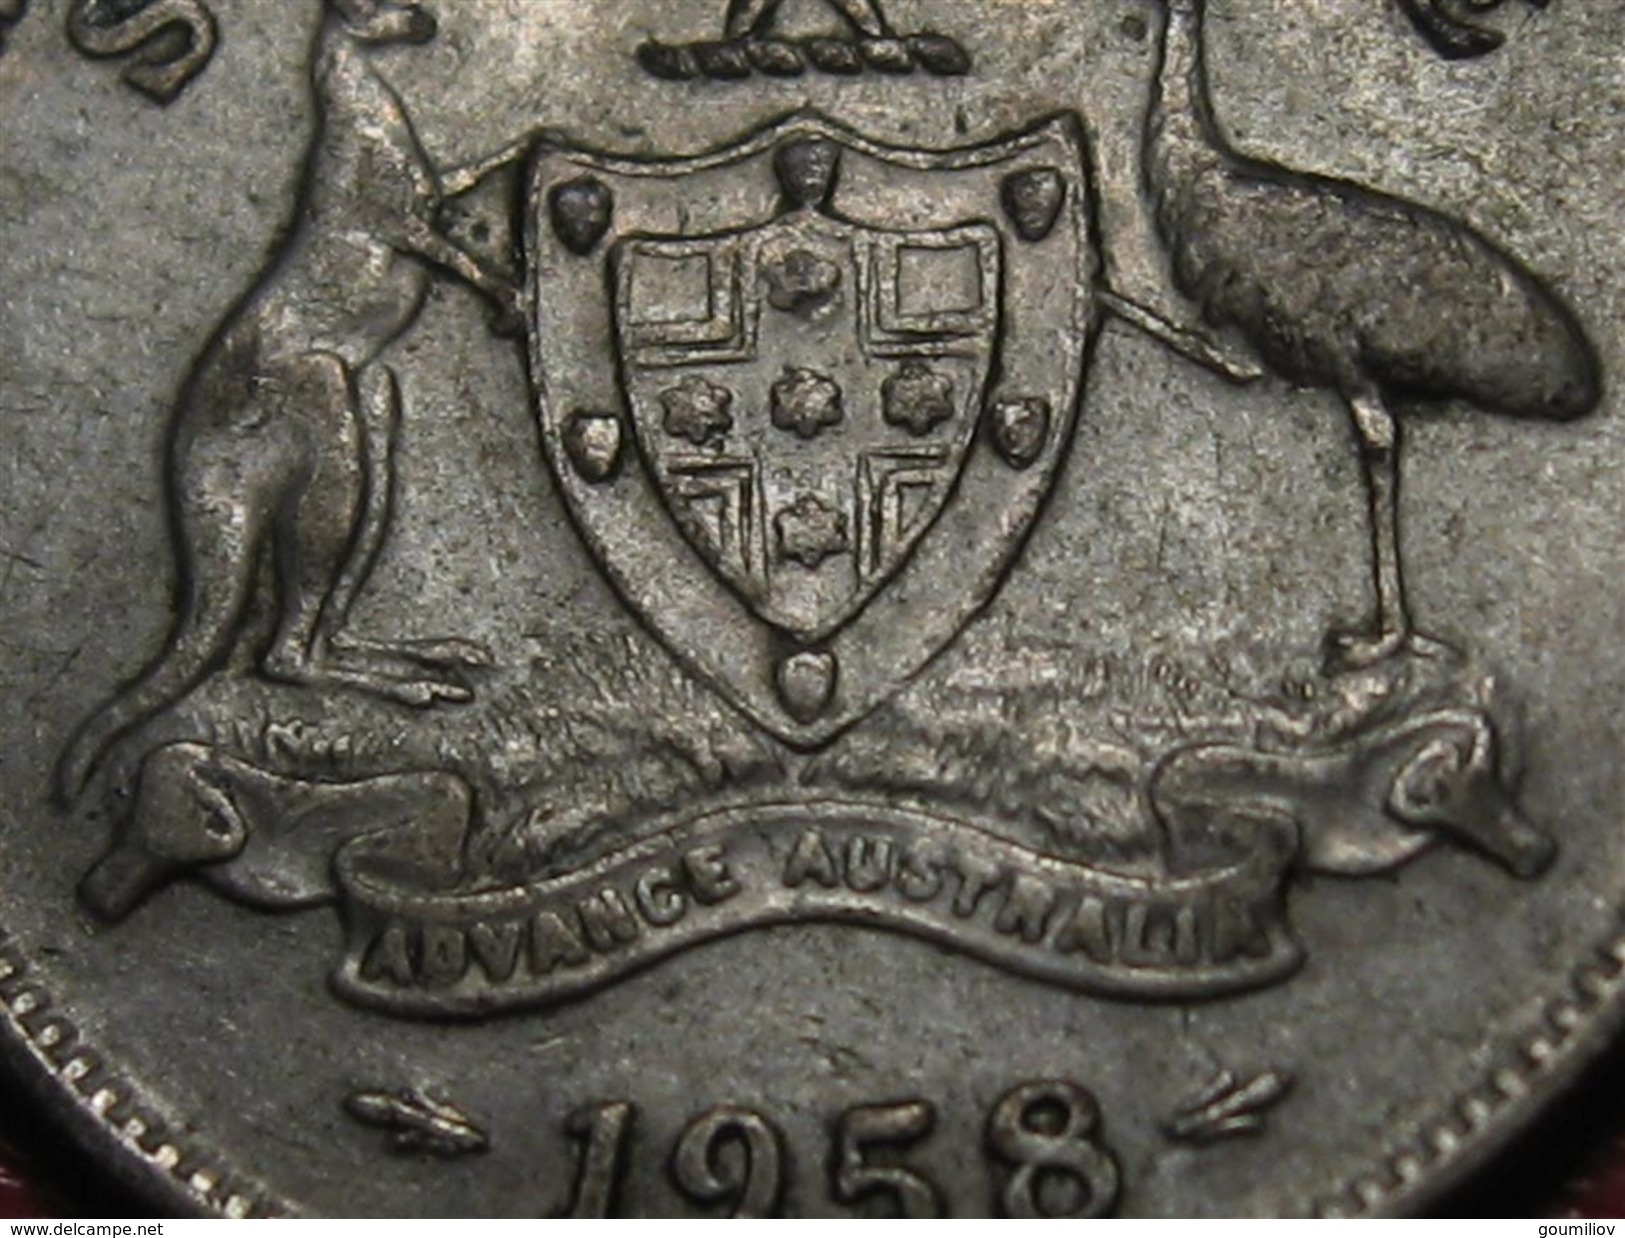 Australie - 6 Pence 1958 3871 - Sixpence